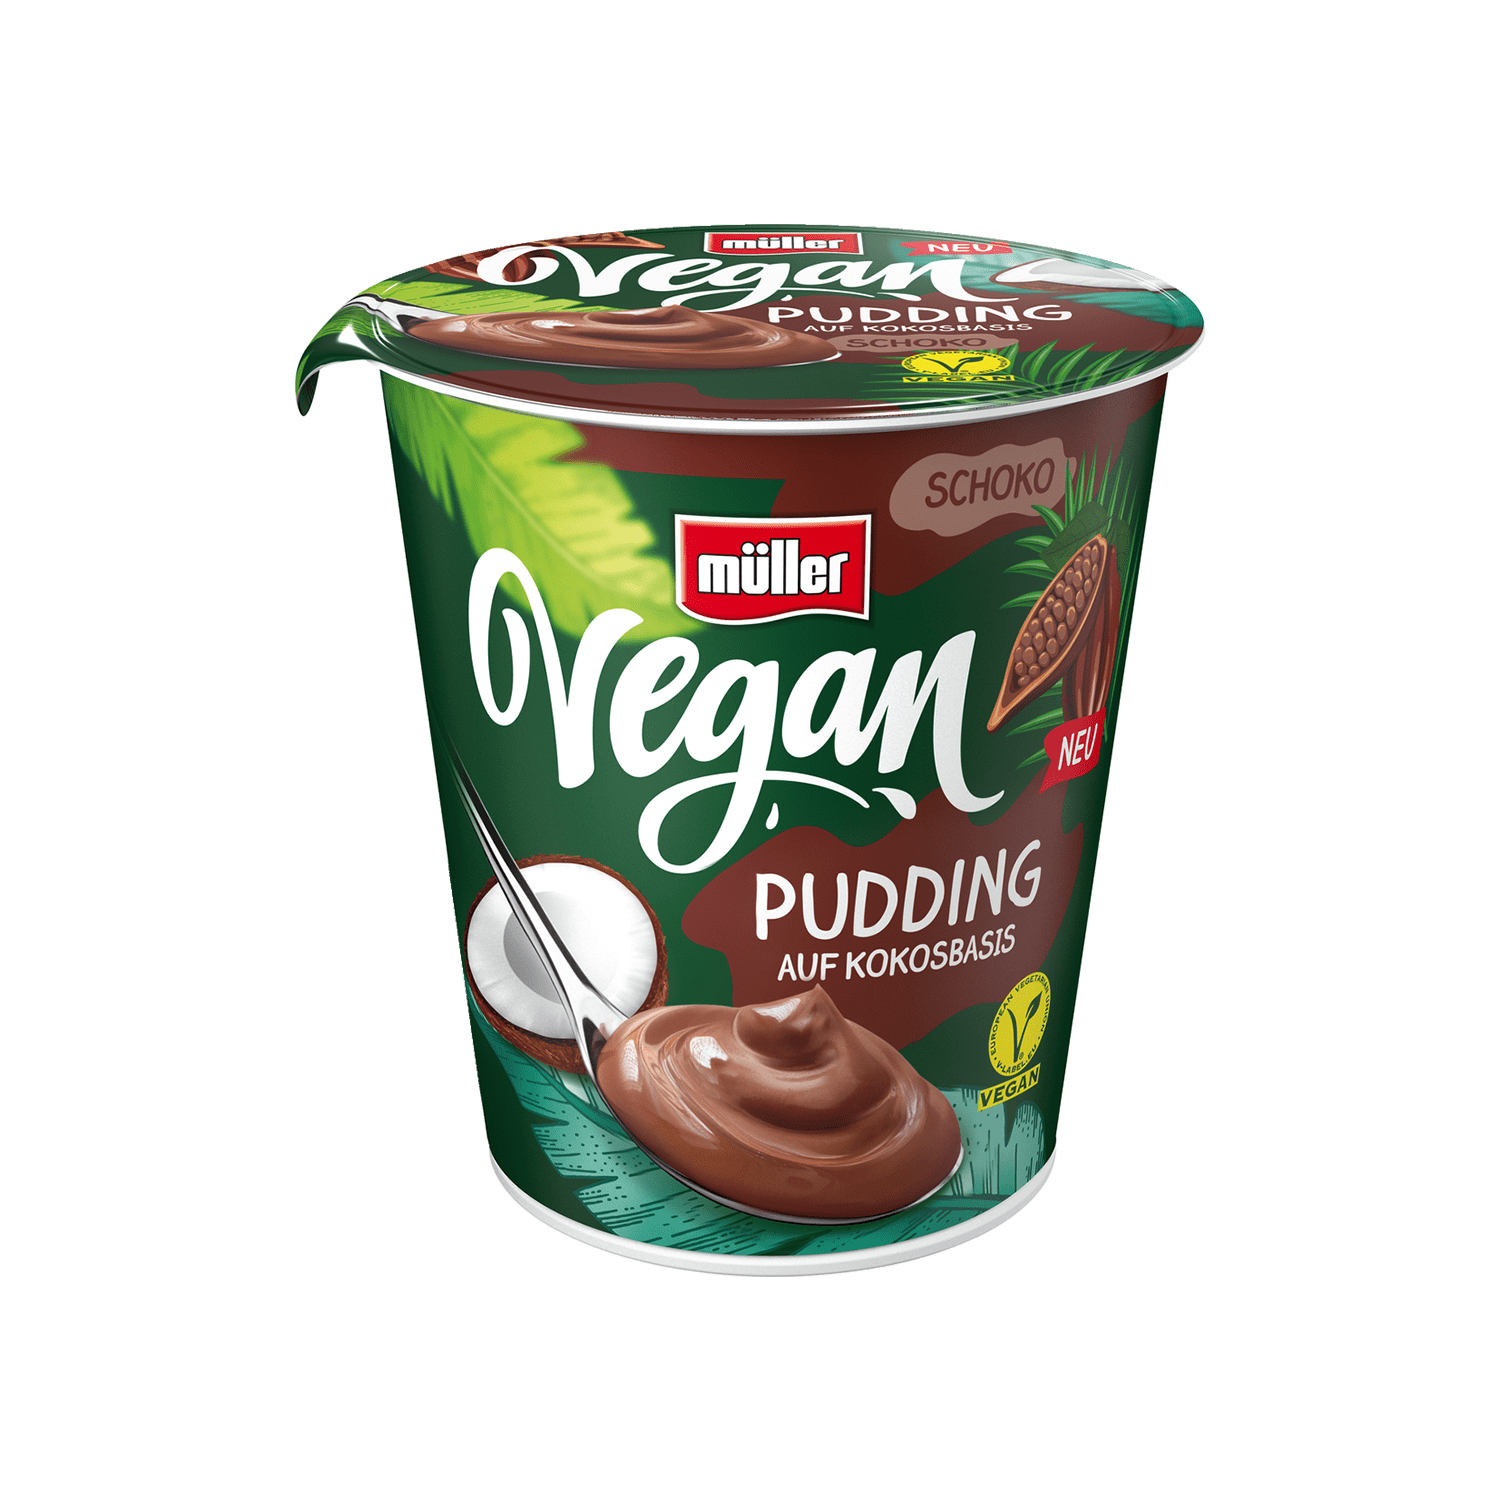 Vegan Pudding Schoko, 300g